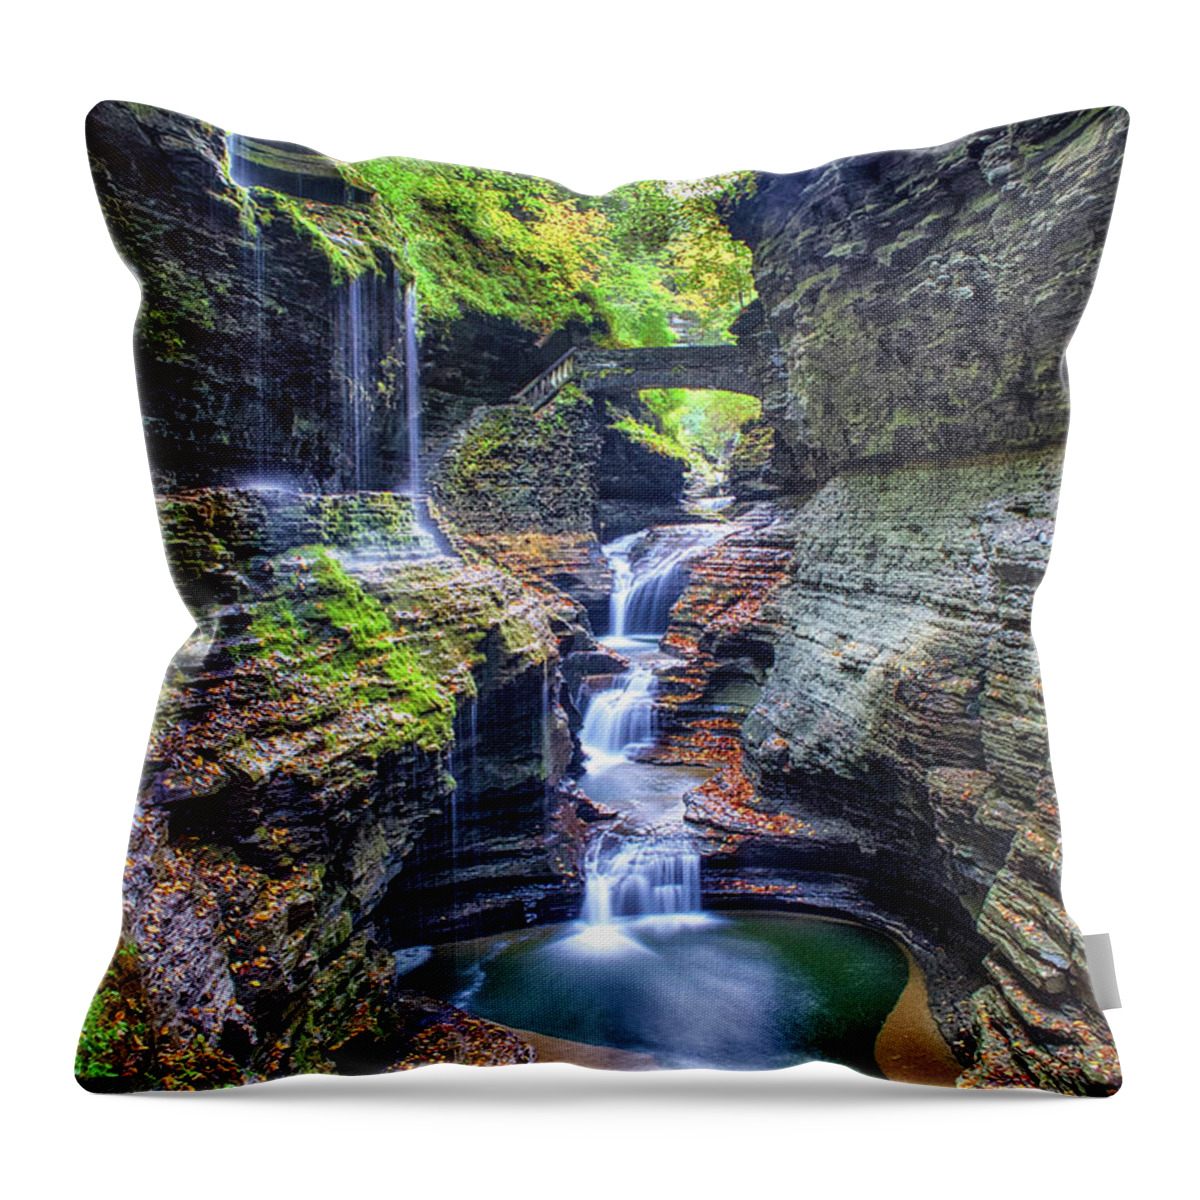 Nunweiler Throw Pillow featuring the photograph Rainbow Falls at Watkins Glen by Nunweiler Photography